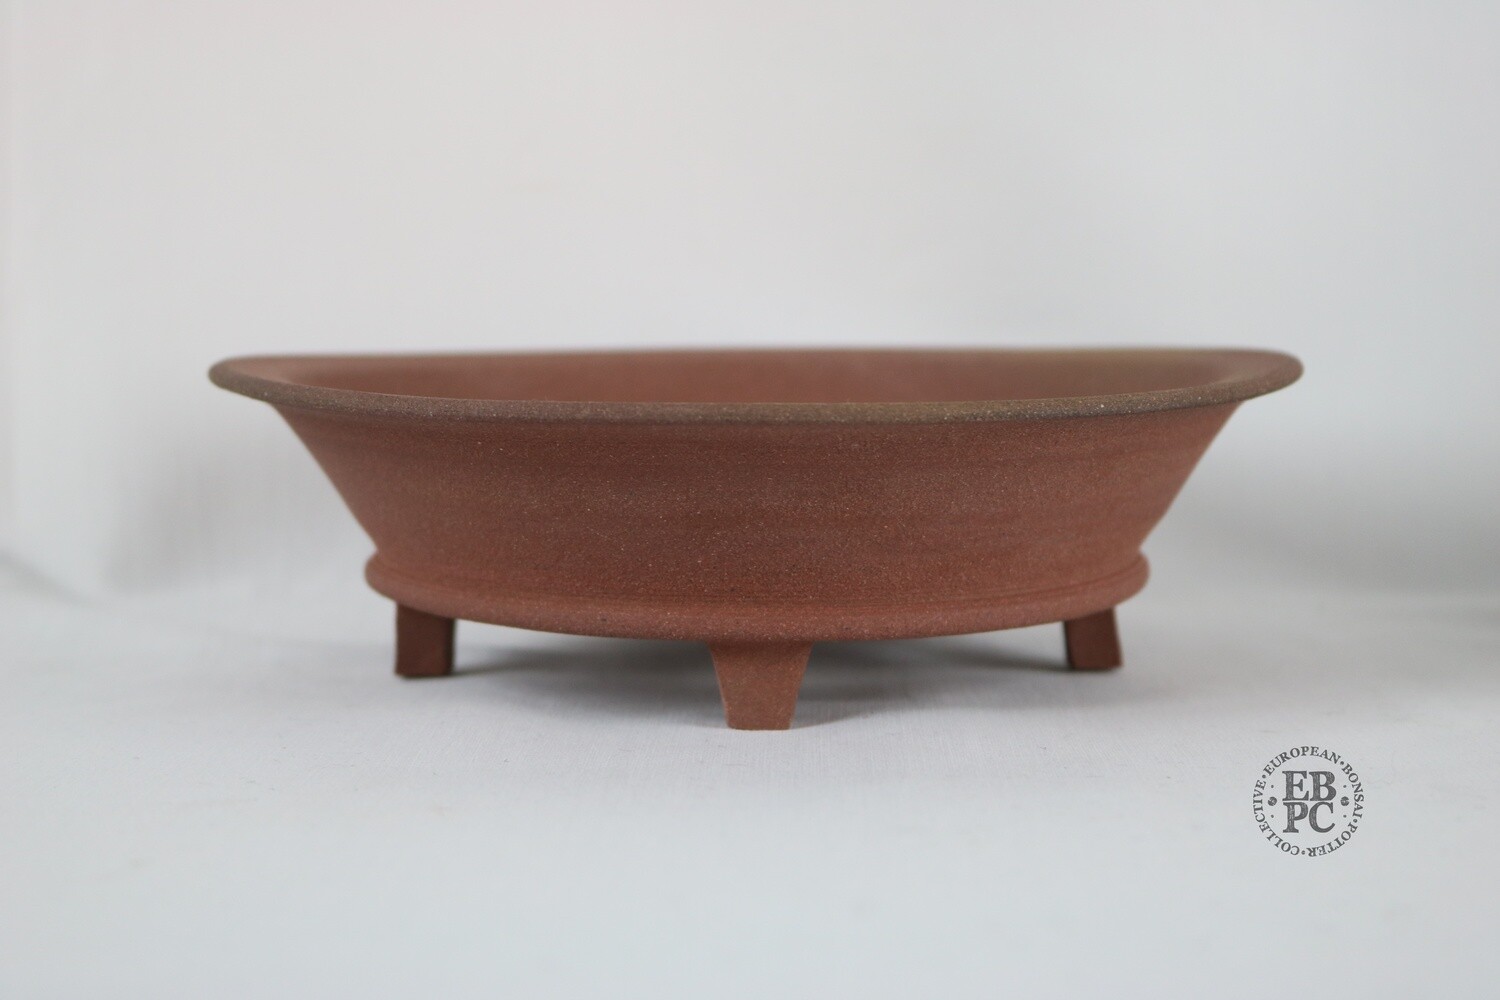 Aleixo Seixo - Unglazed; Round; 19.7cm; Delicate Uplifted Design; Reddish-Brown Clay; Aleixo Seixo - Spain.